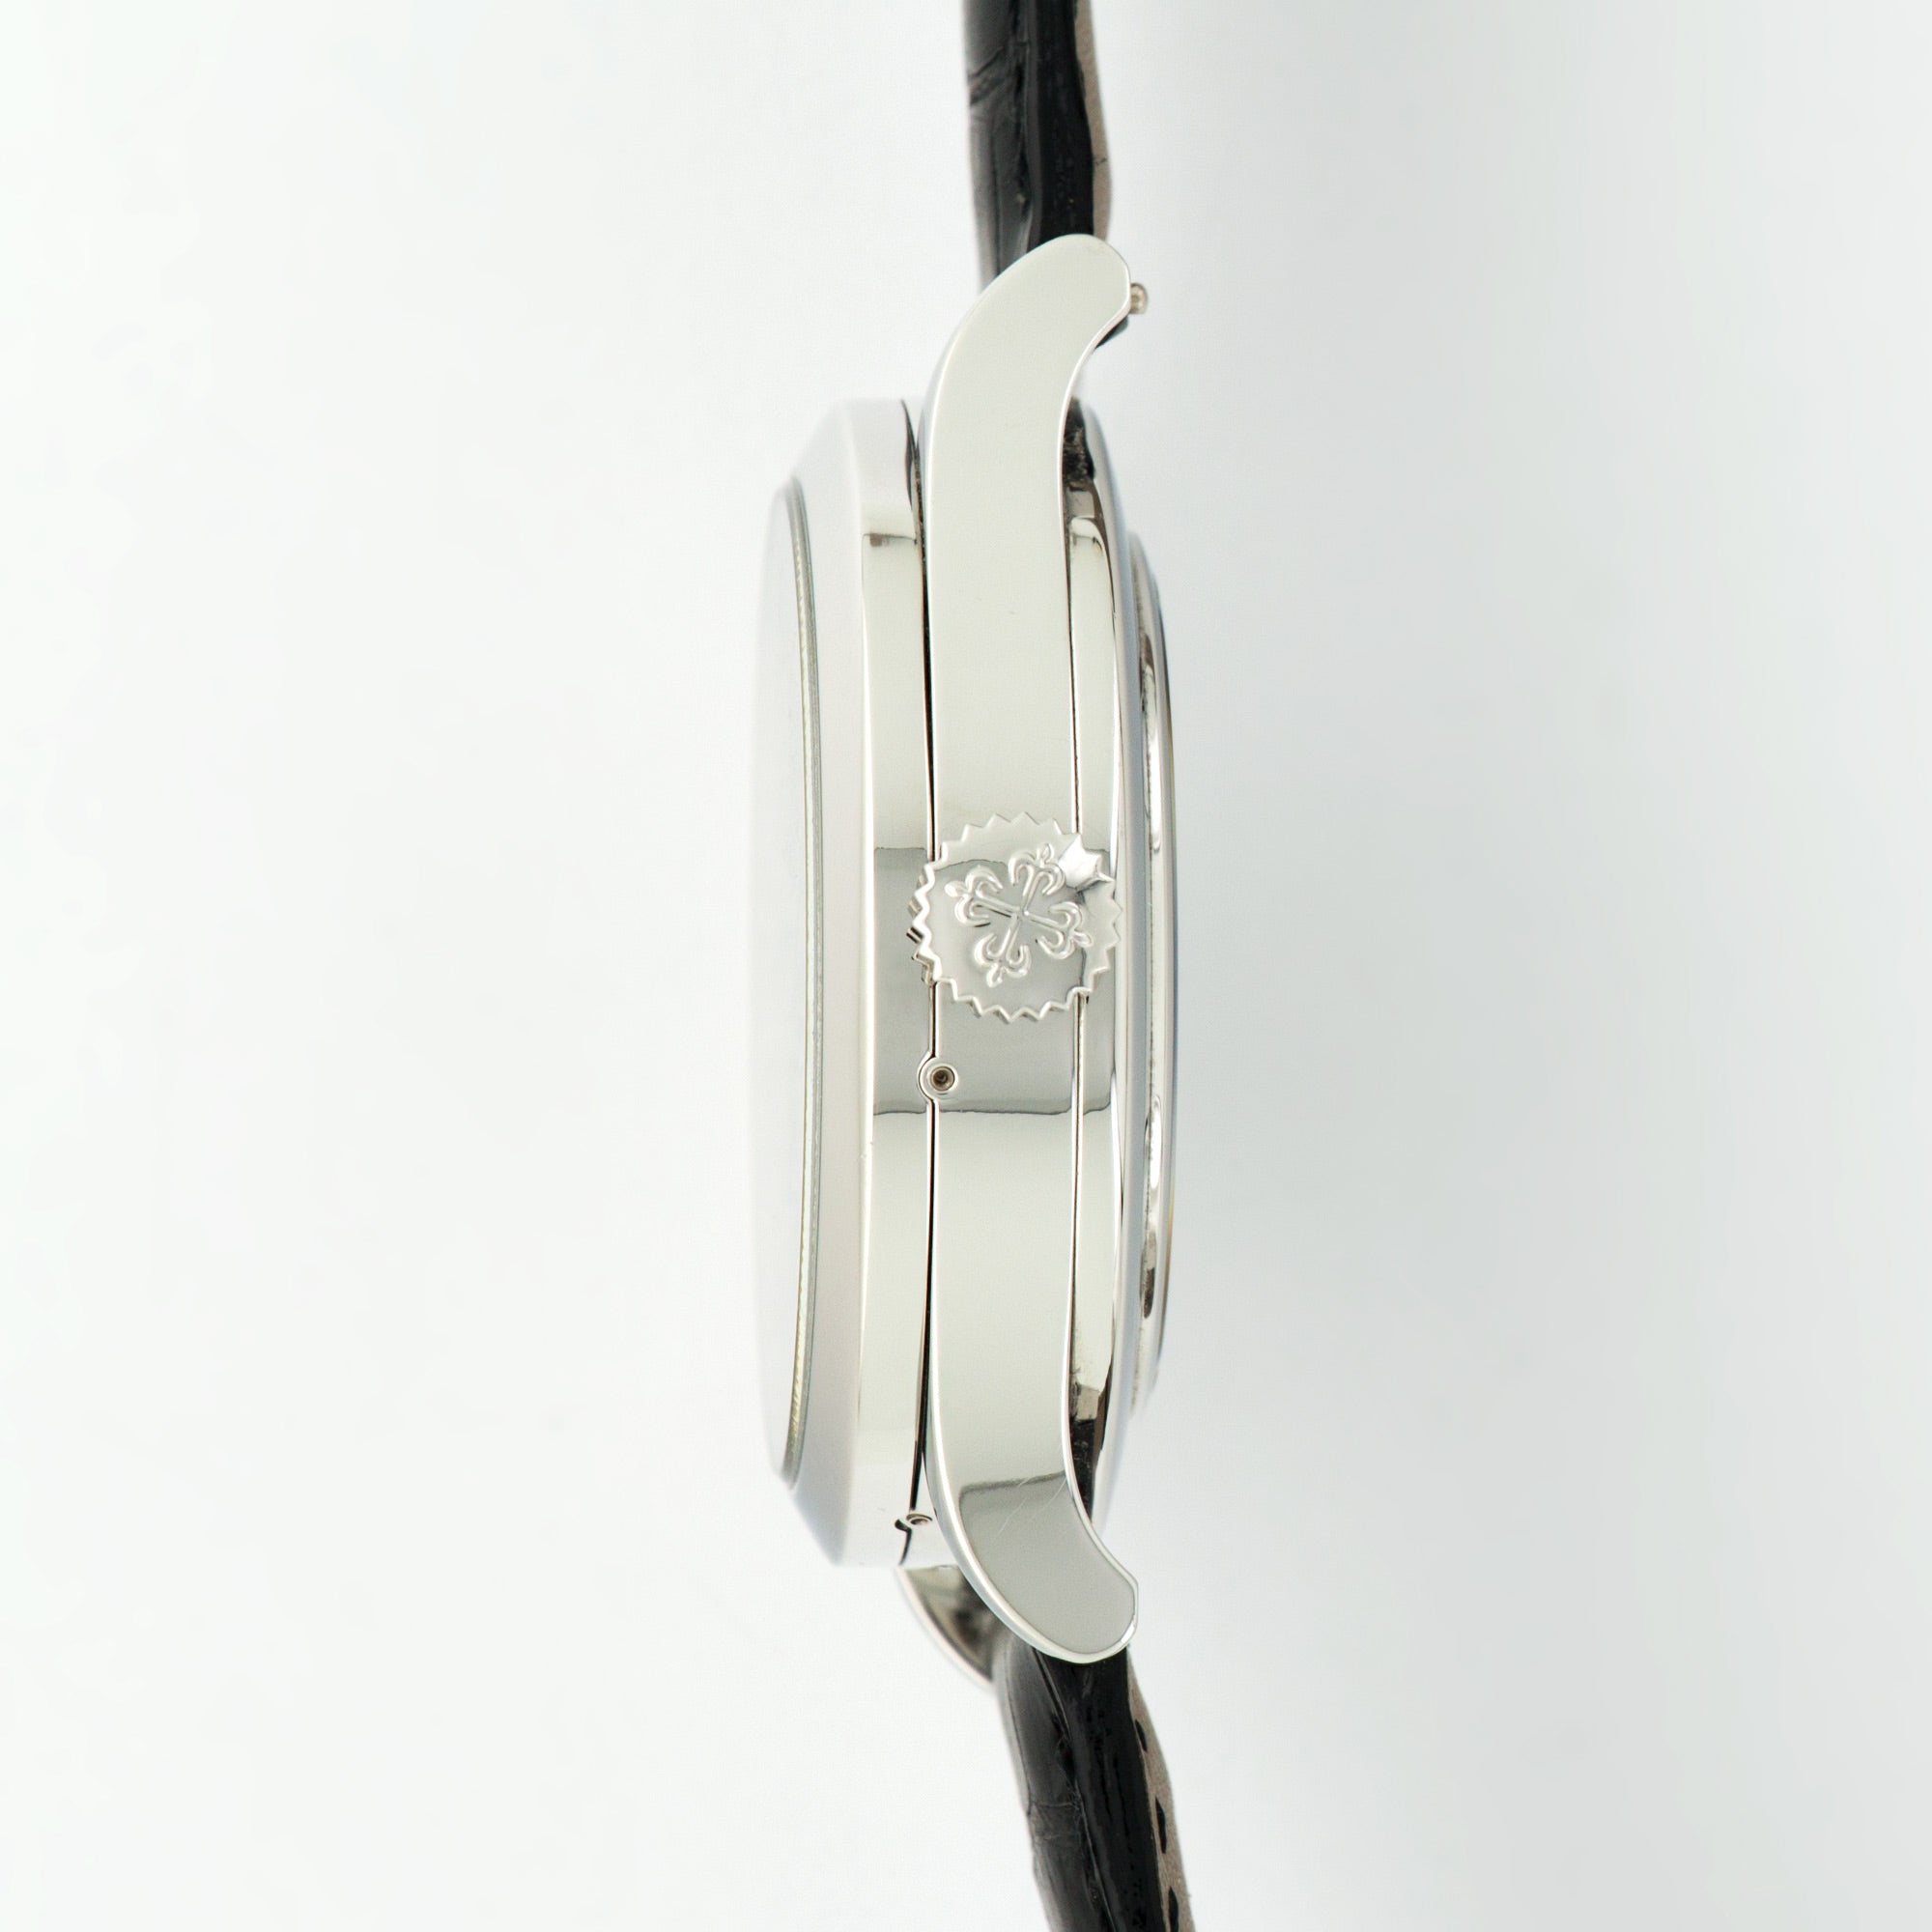 Patek Philippe - Patek Philippe Platinum Minute Repeater Perpetual Calendar Watch Ref. 5216 - The Keystone Watches